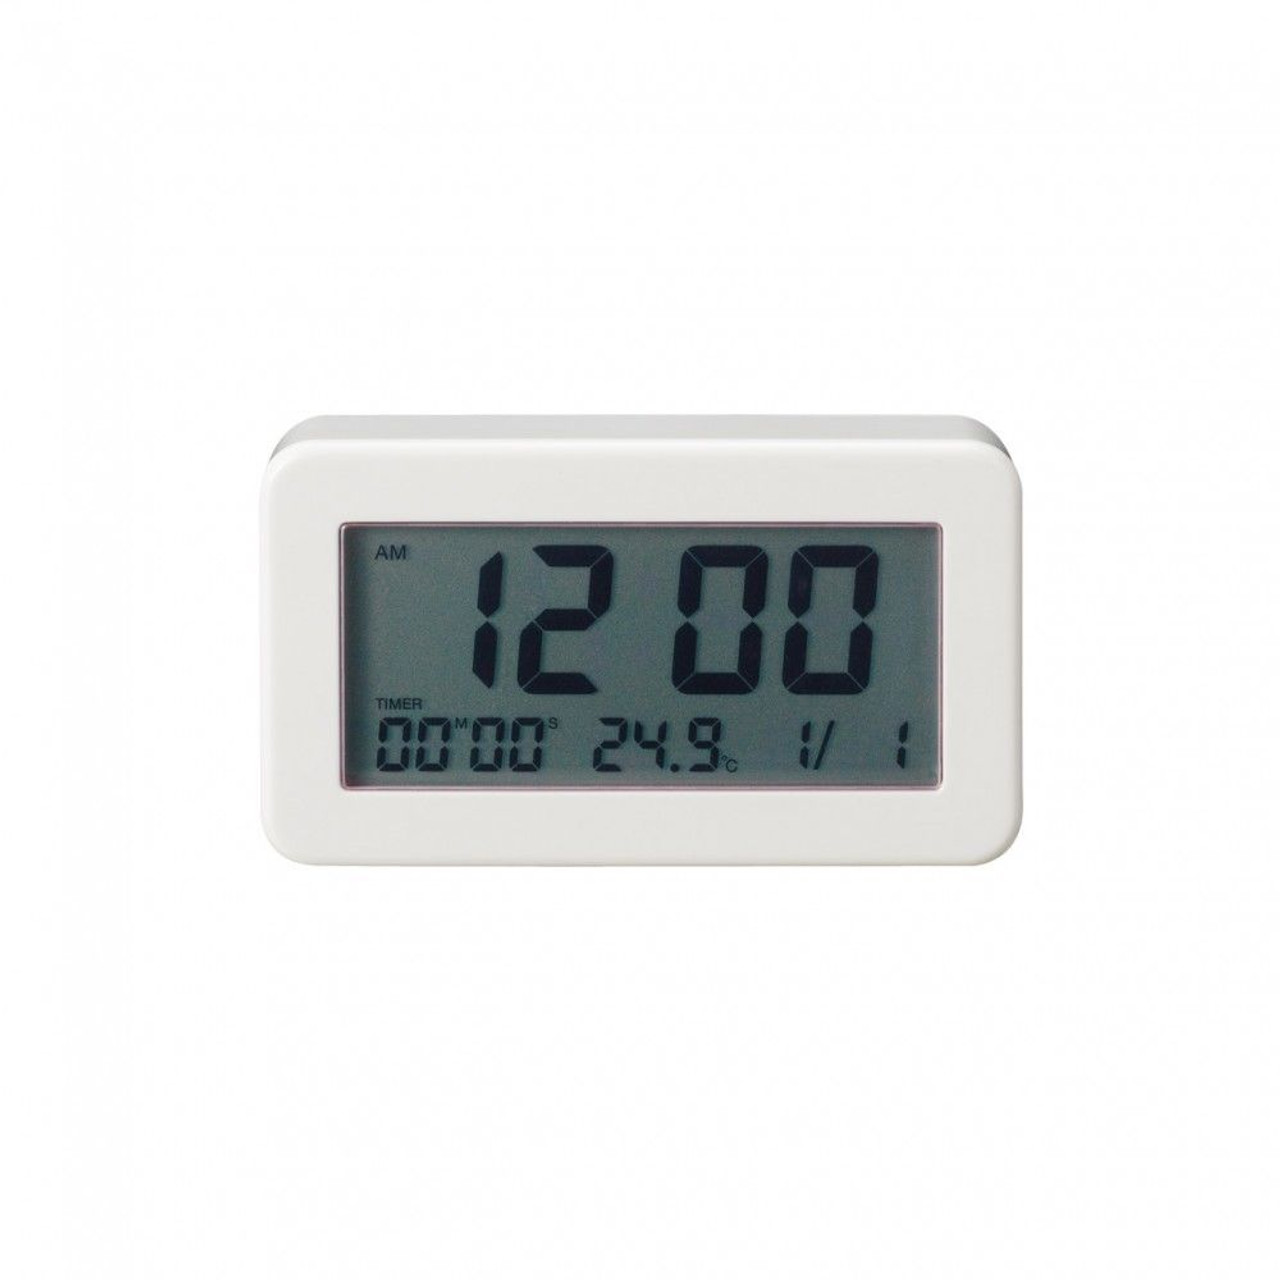 SALE Price, MUJI Digital bus clock Splashproof type IPX4 Thermometer calendar MoMA 61152516 Home Decor White